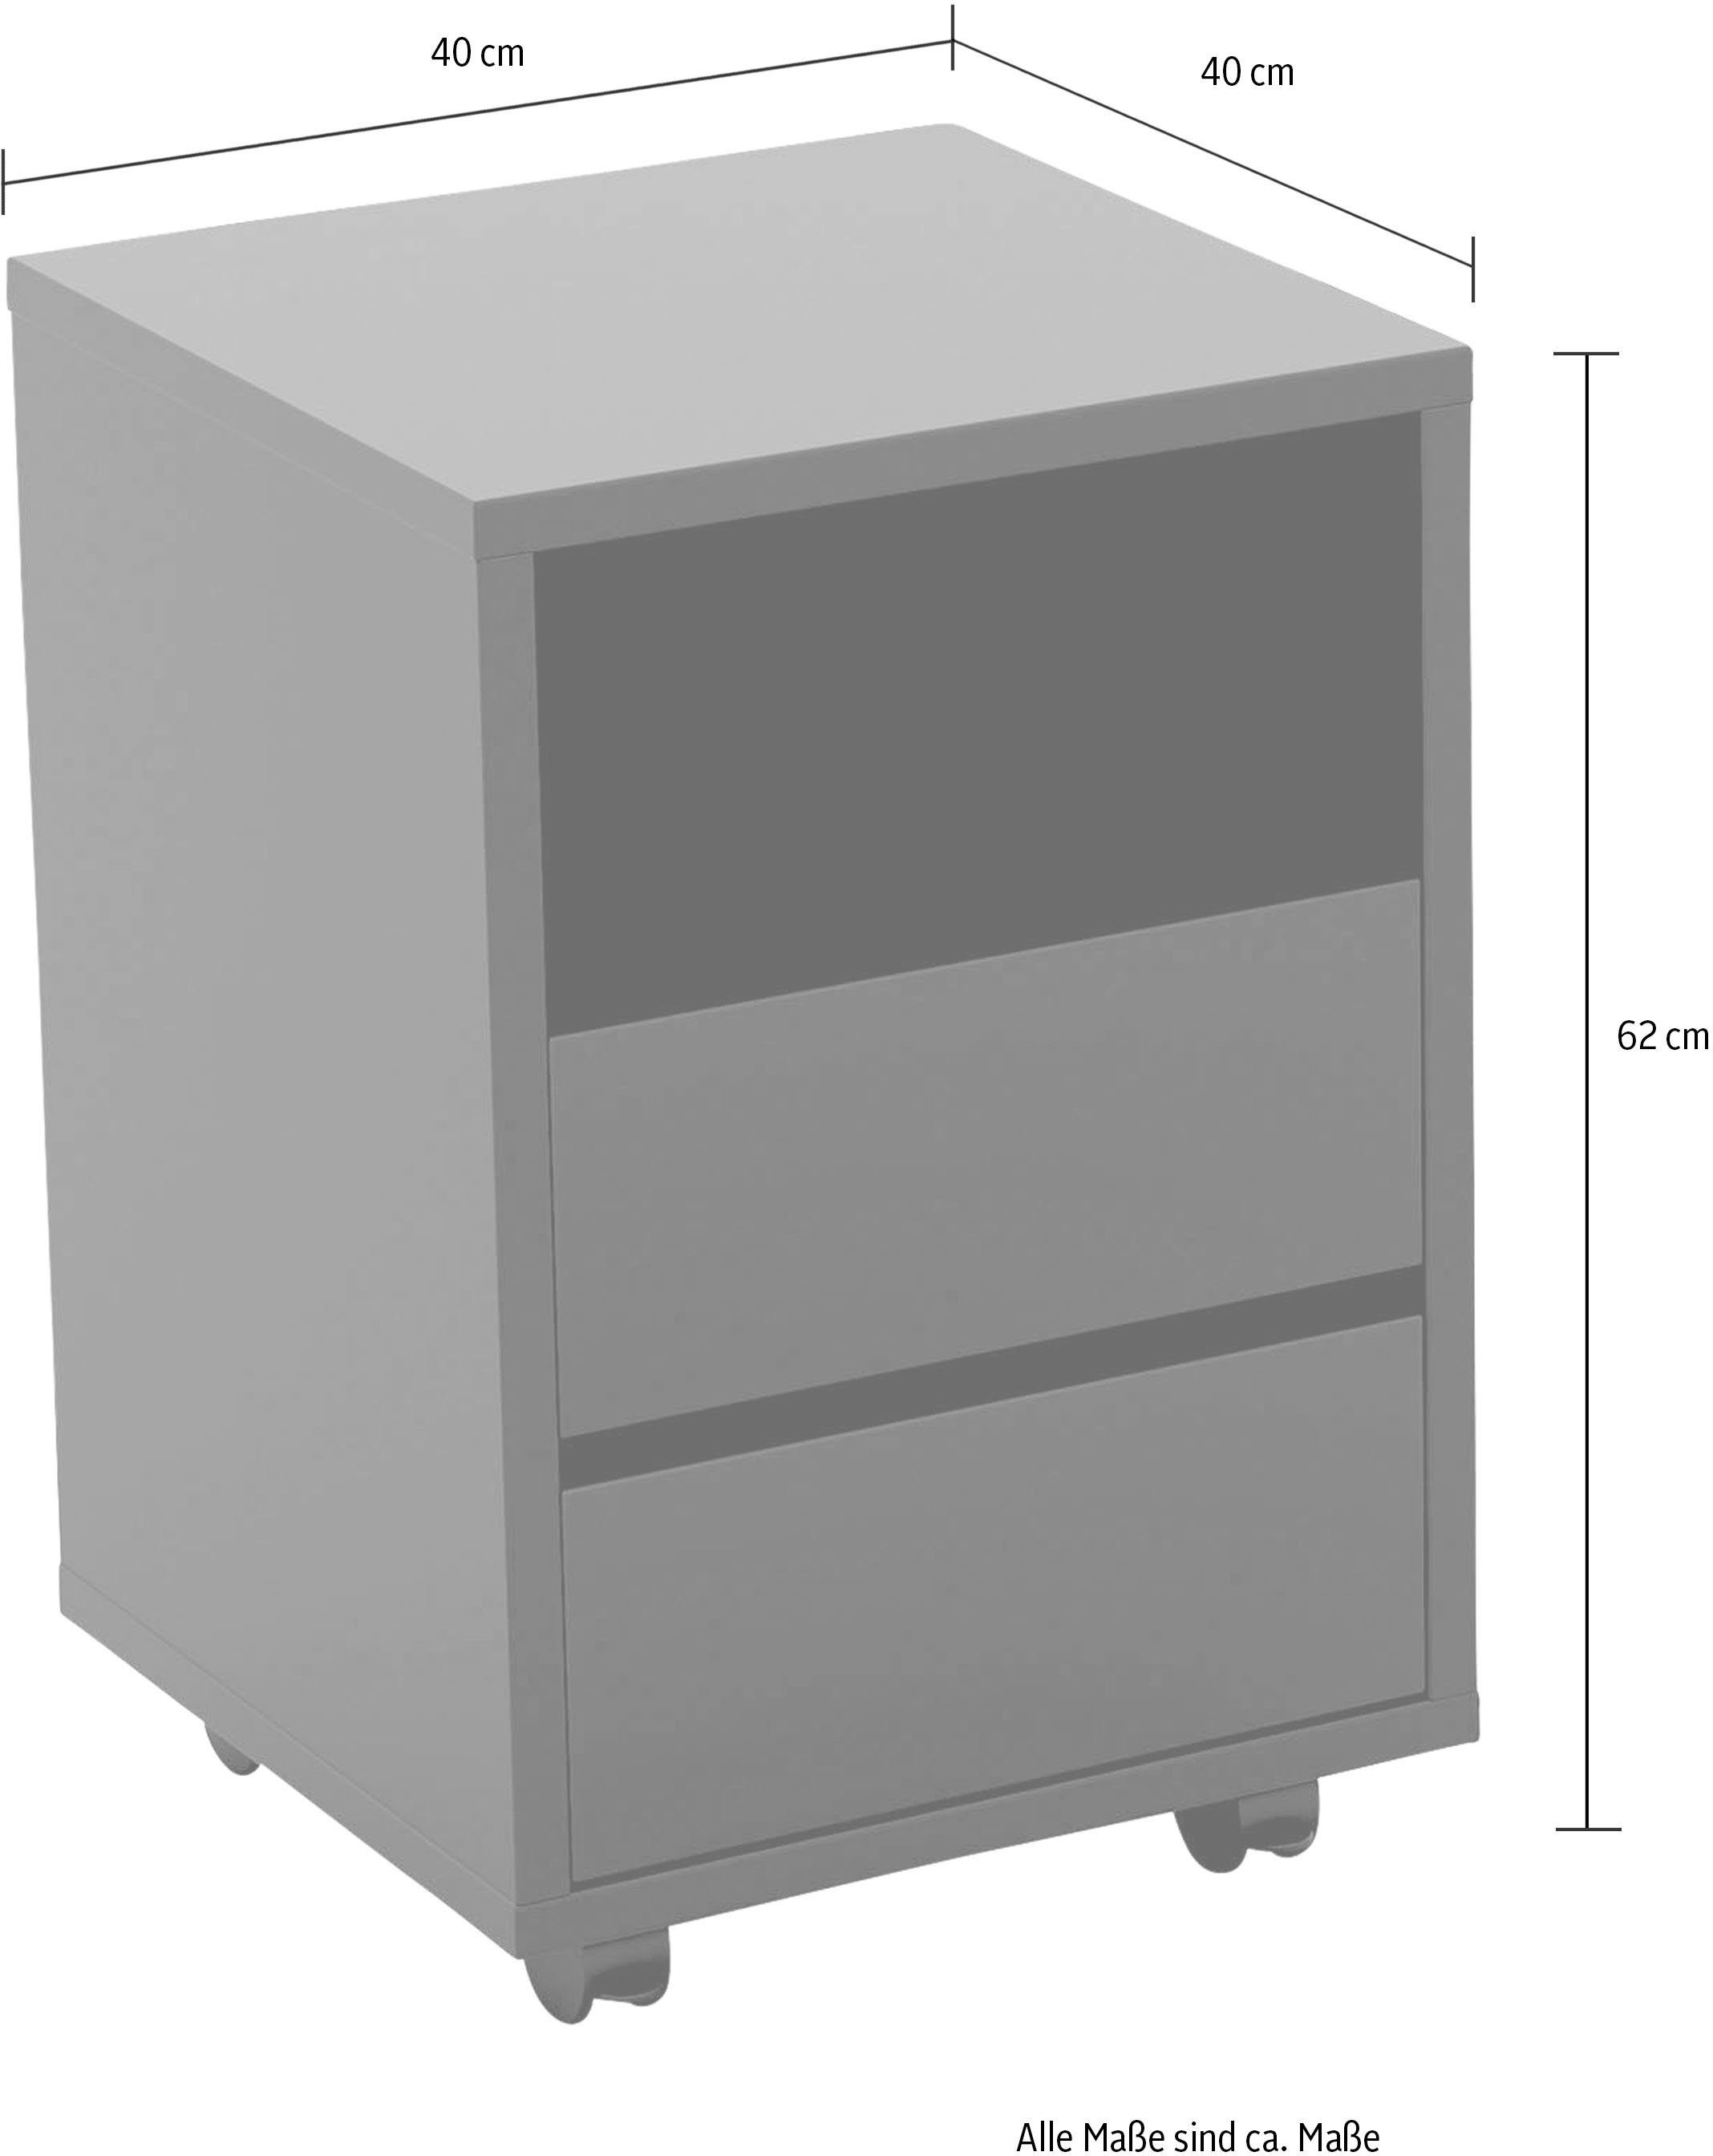 Bürocontainer 2 Rollcontainer weiss cm, 40x40x62 im Design, Agapi, Helvetia modernen Schubkästen